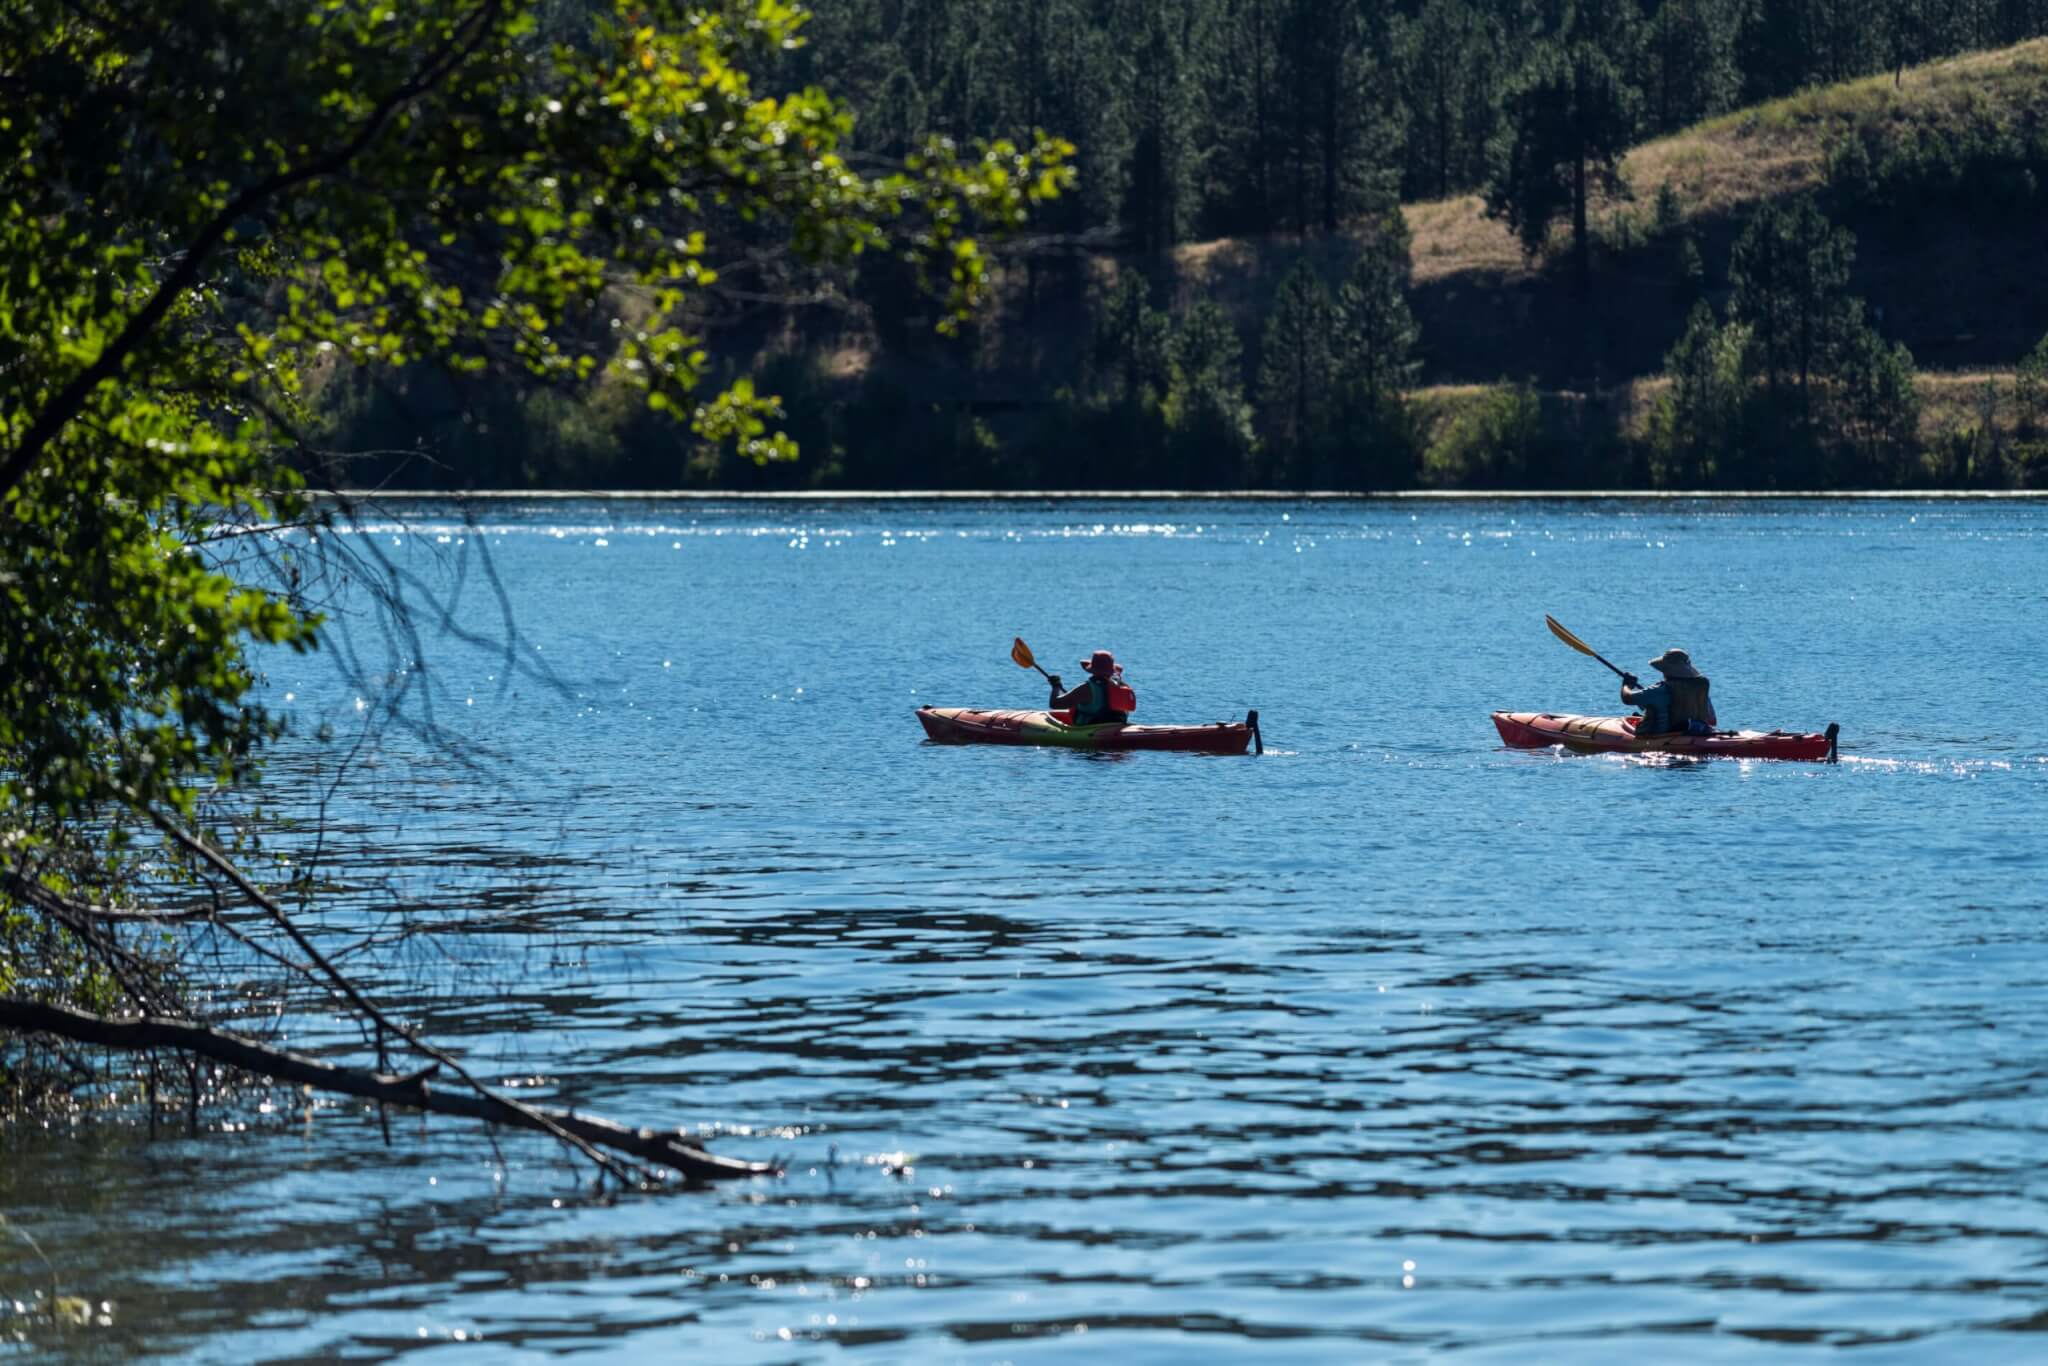 Two people wearing hats kayak along a sun-dappled lake in Eastern Washington.